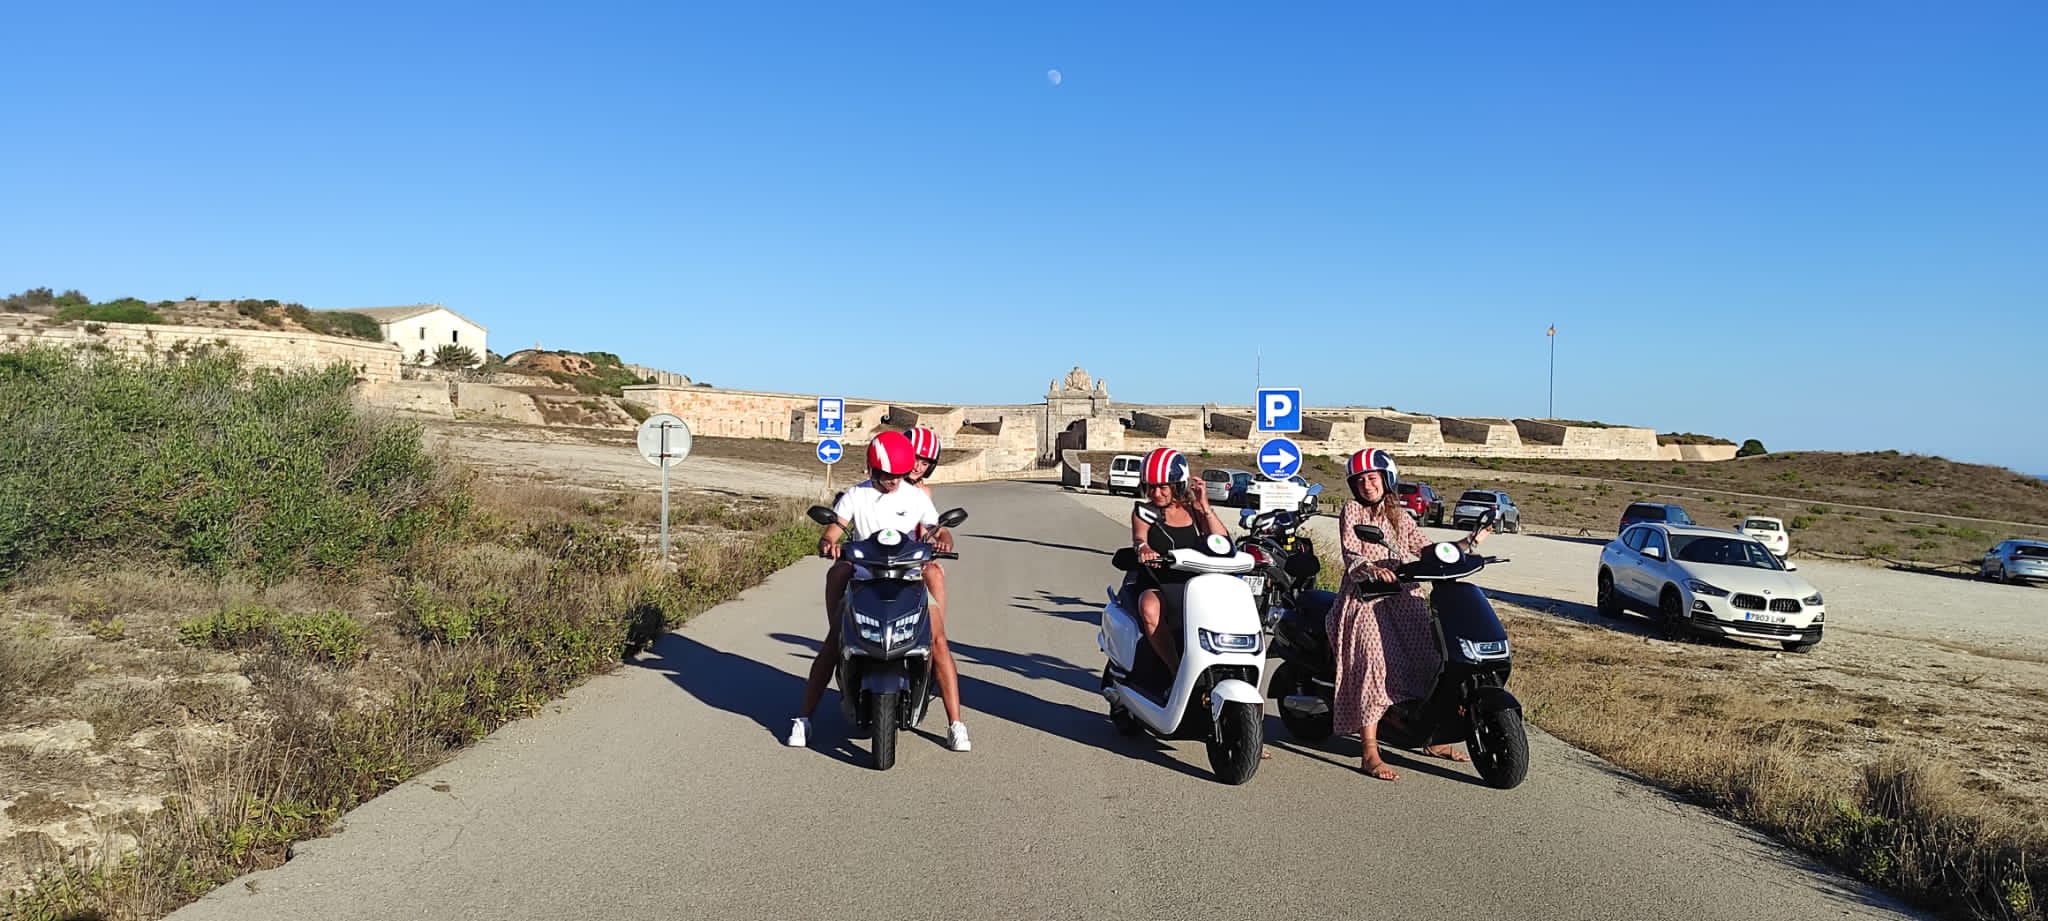 Lloguer moto Menorca